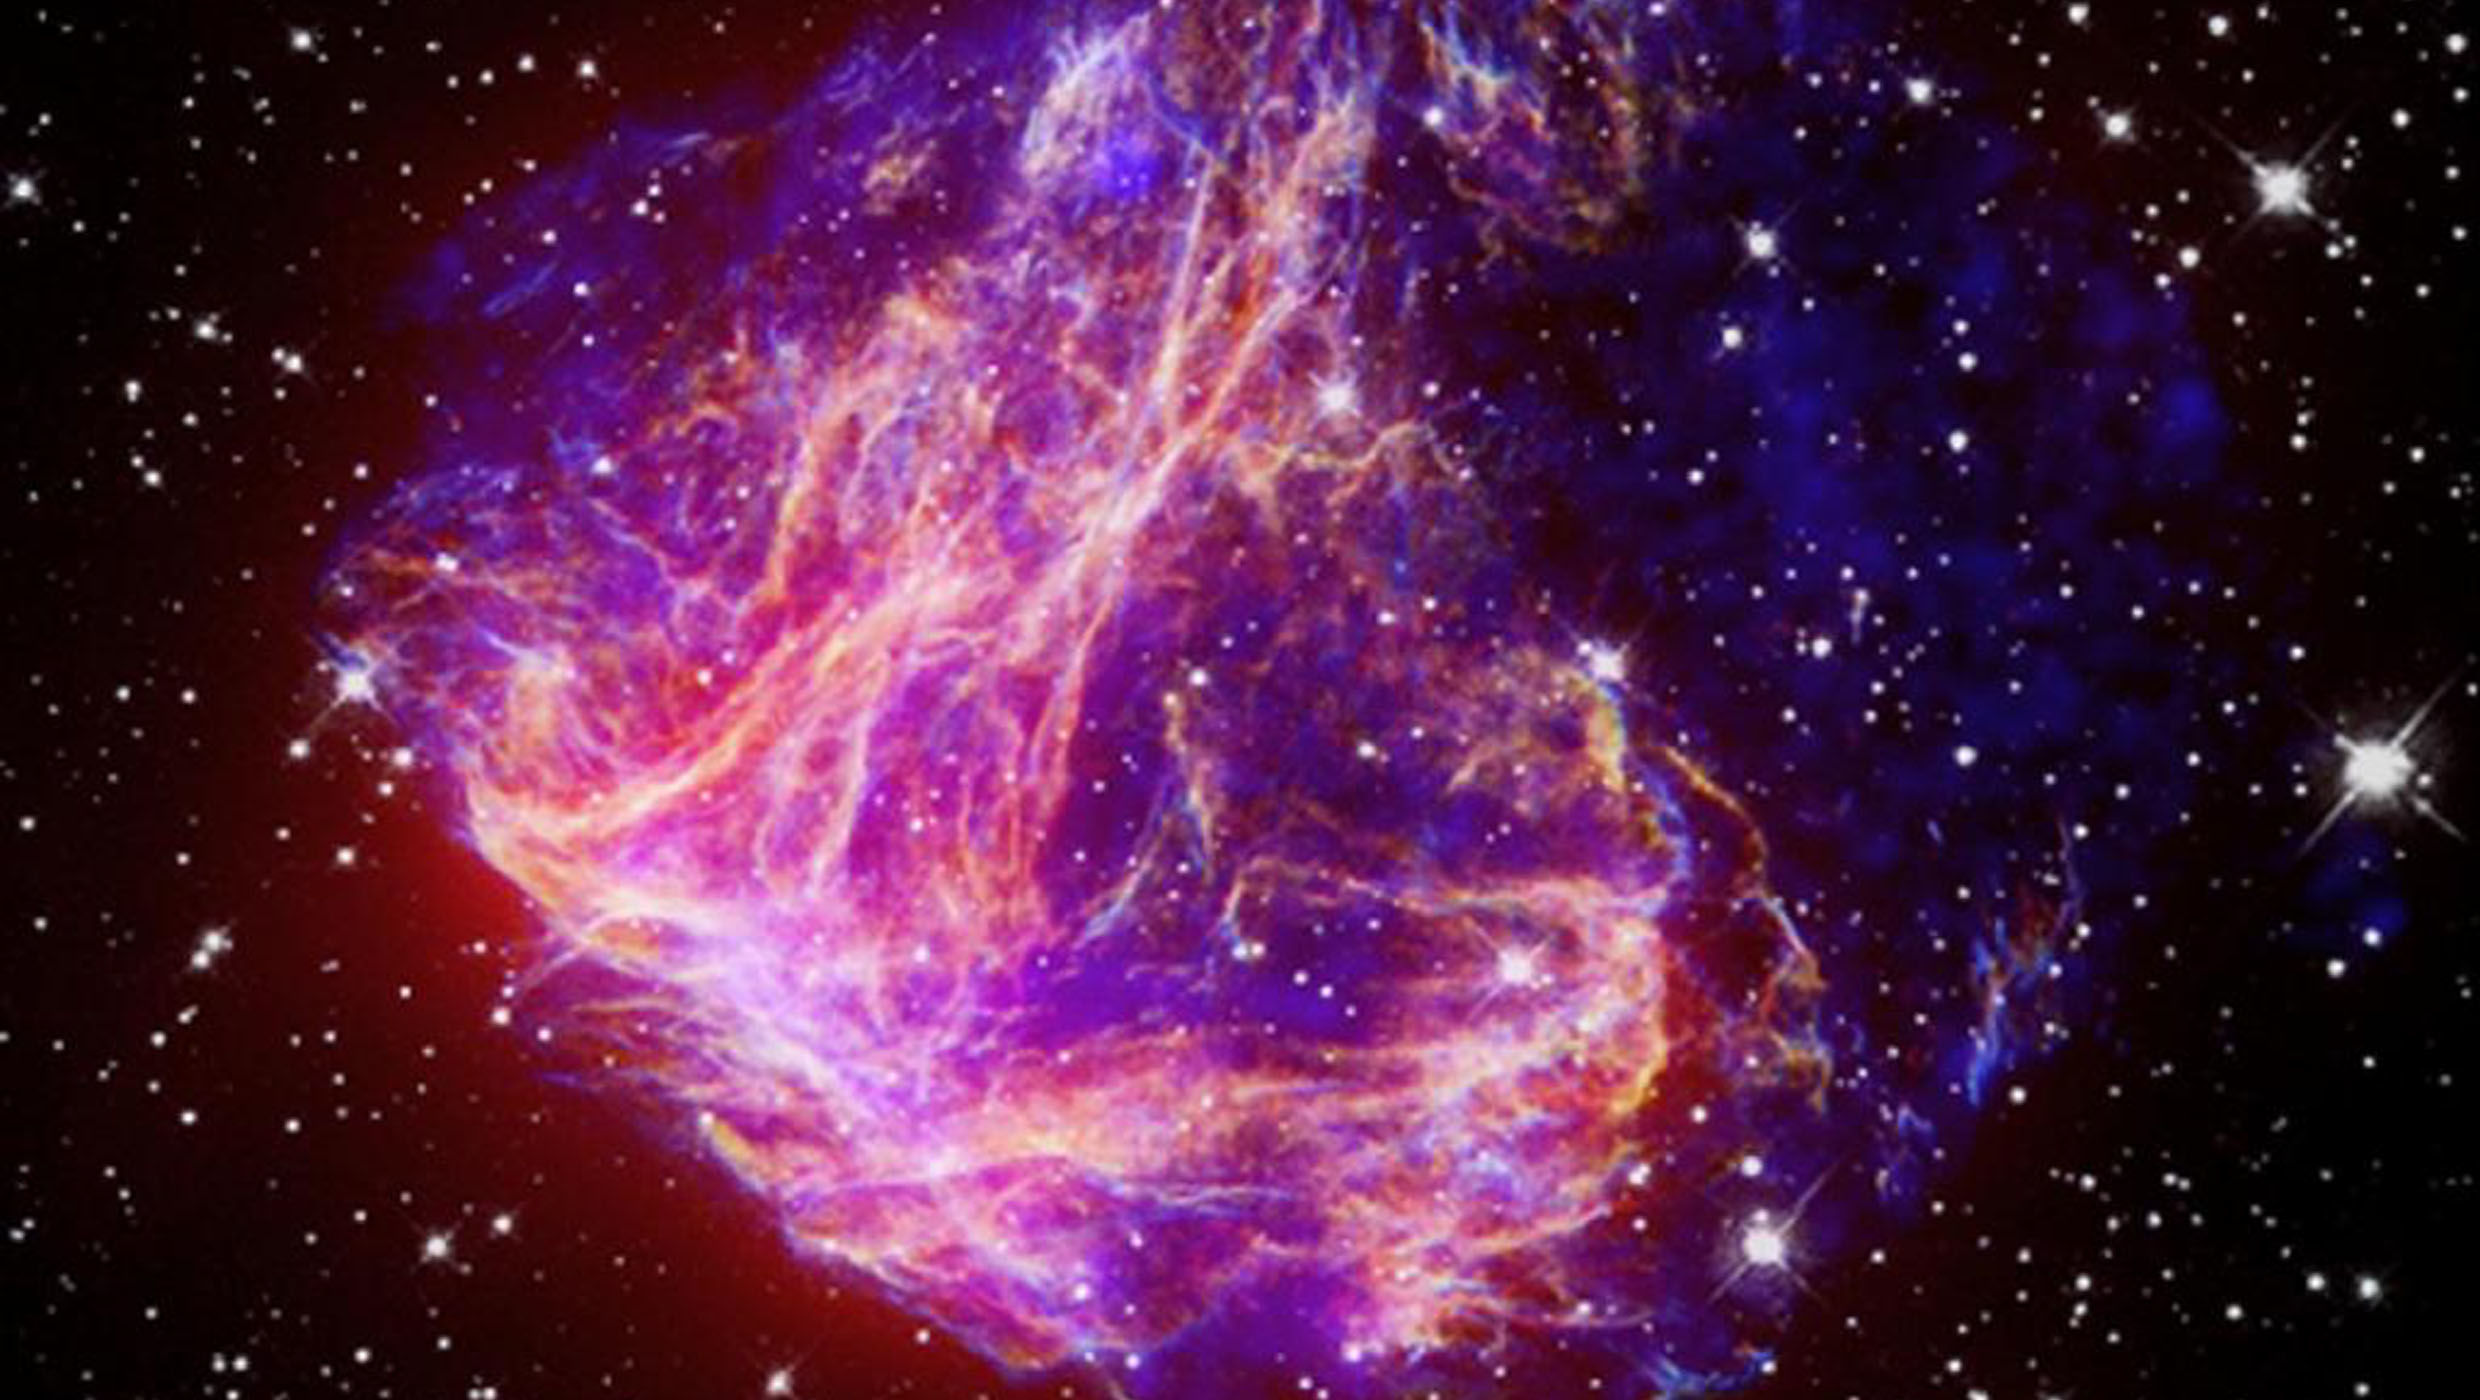 stellar debris in the Large Magellanic Cloud